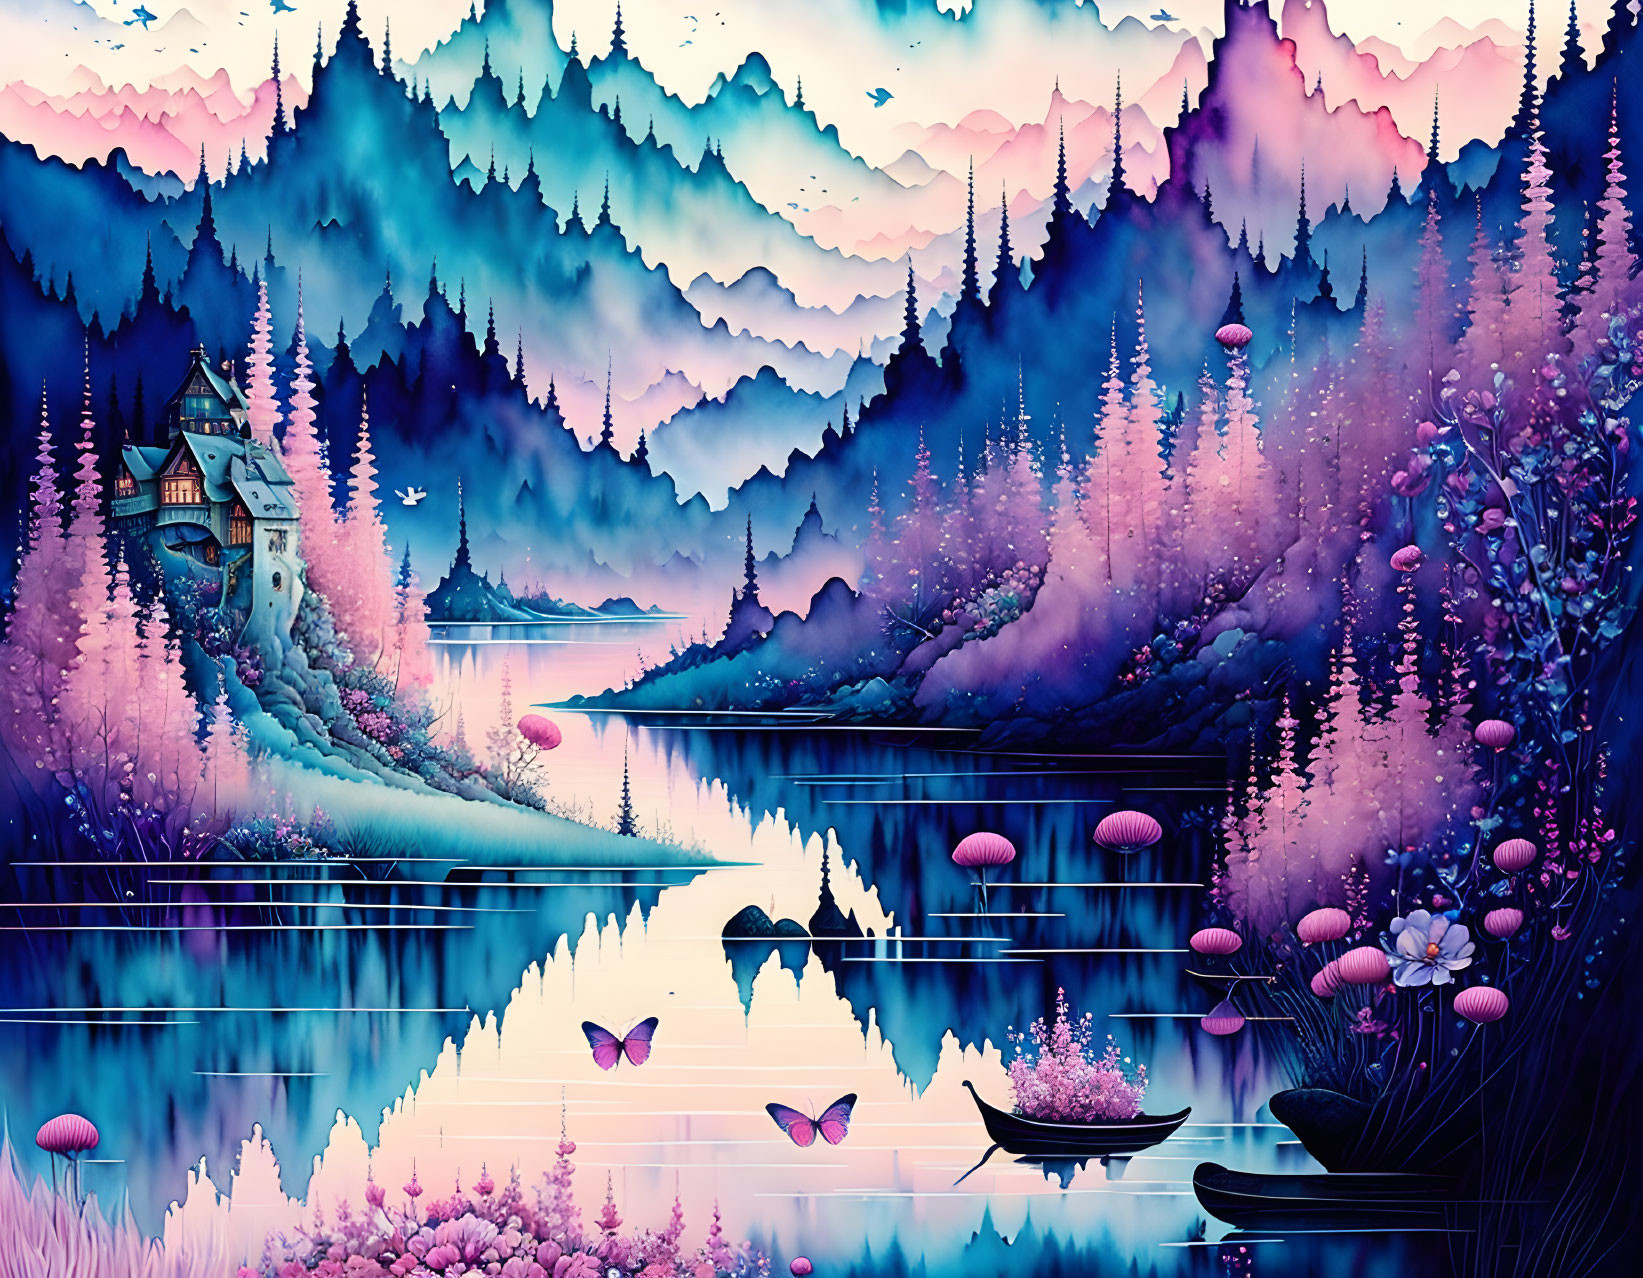 Vivid landscape illustration: layered purple and blue mountains, serene lake, quaint house, lush foliage,